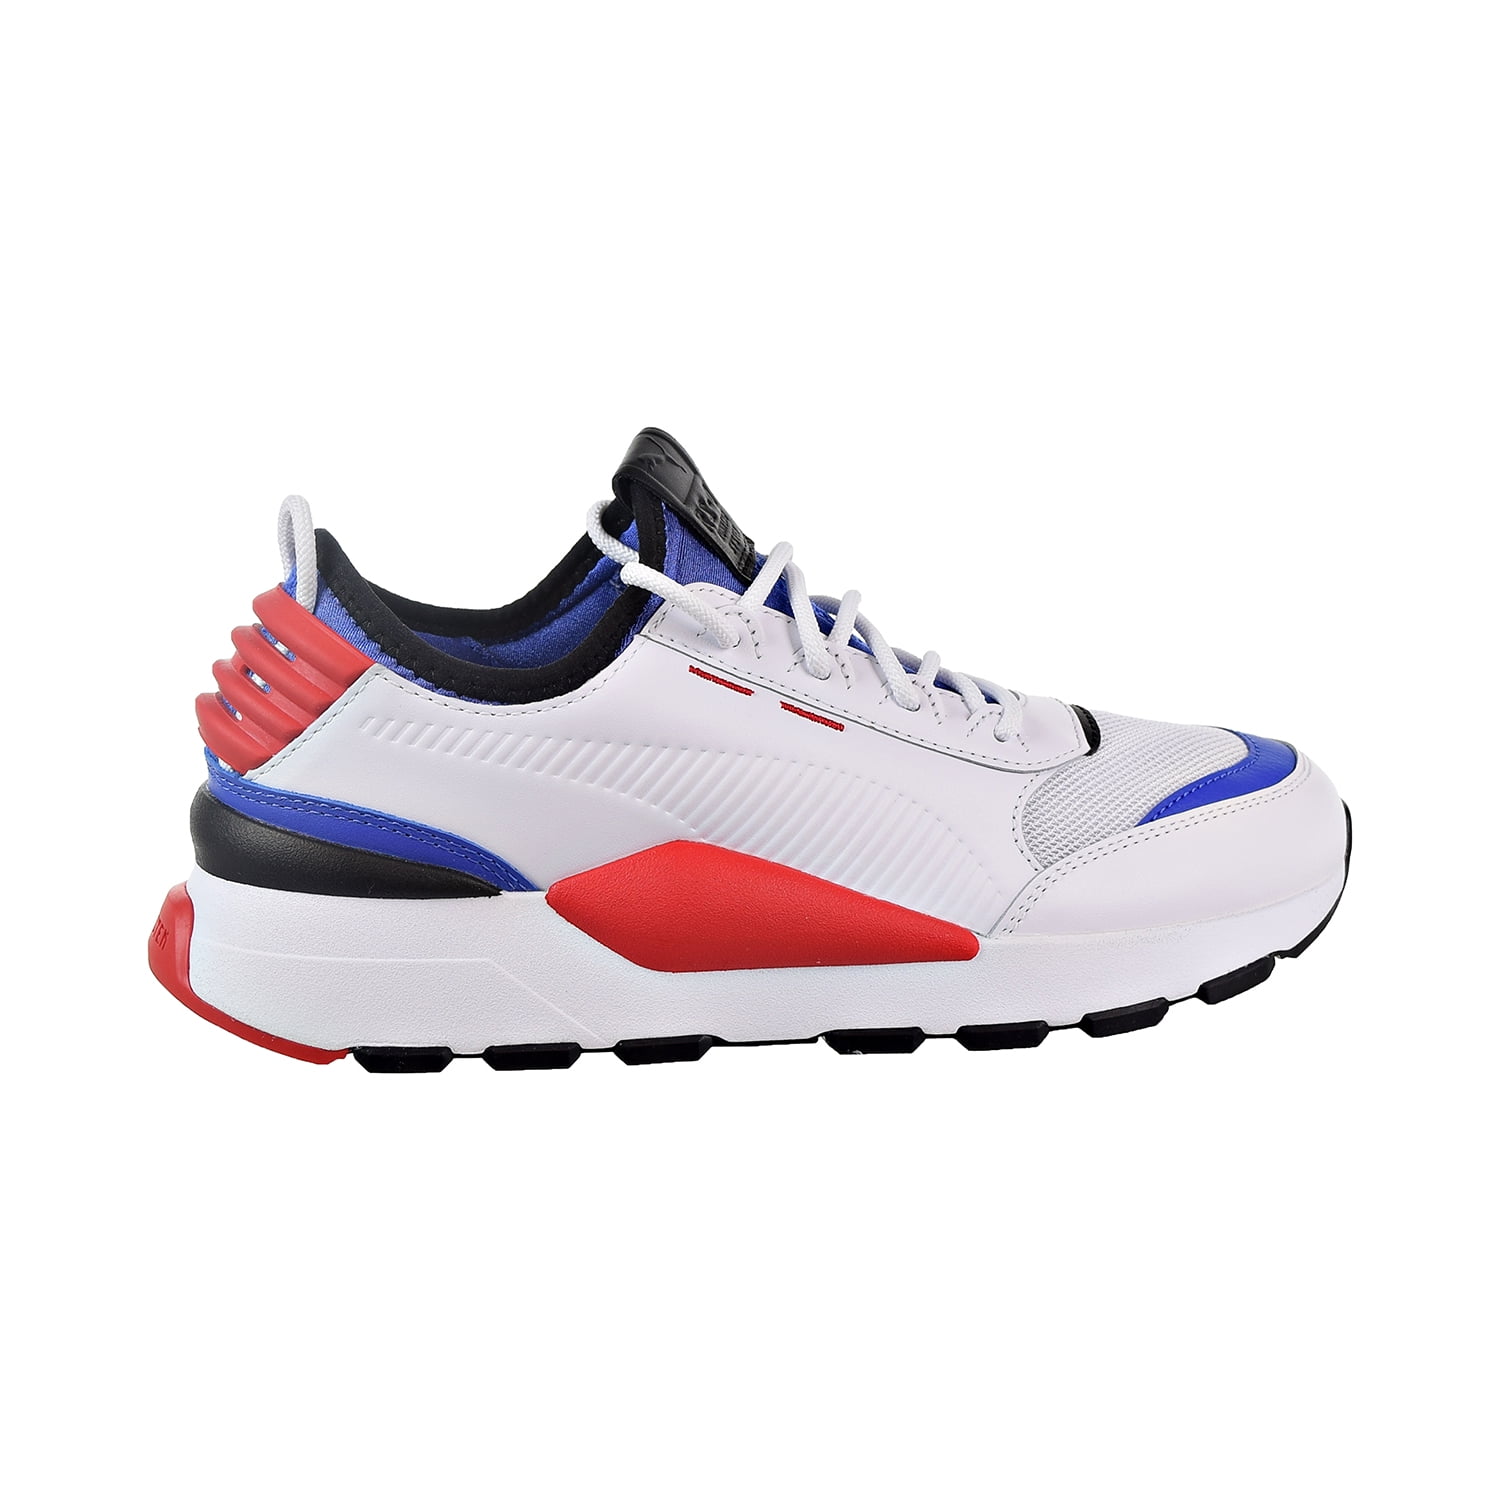 Anillo duro cometer Desnudo Puma RS-0 Sound Men's Shoes White/Dazz Blue/High Risk Red 366890-01 -  Walmart.com